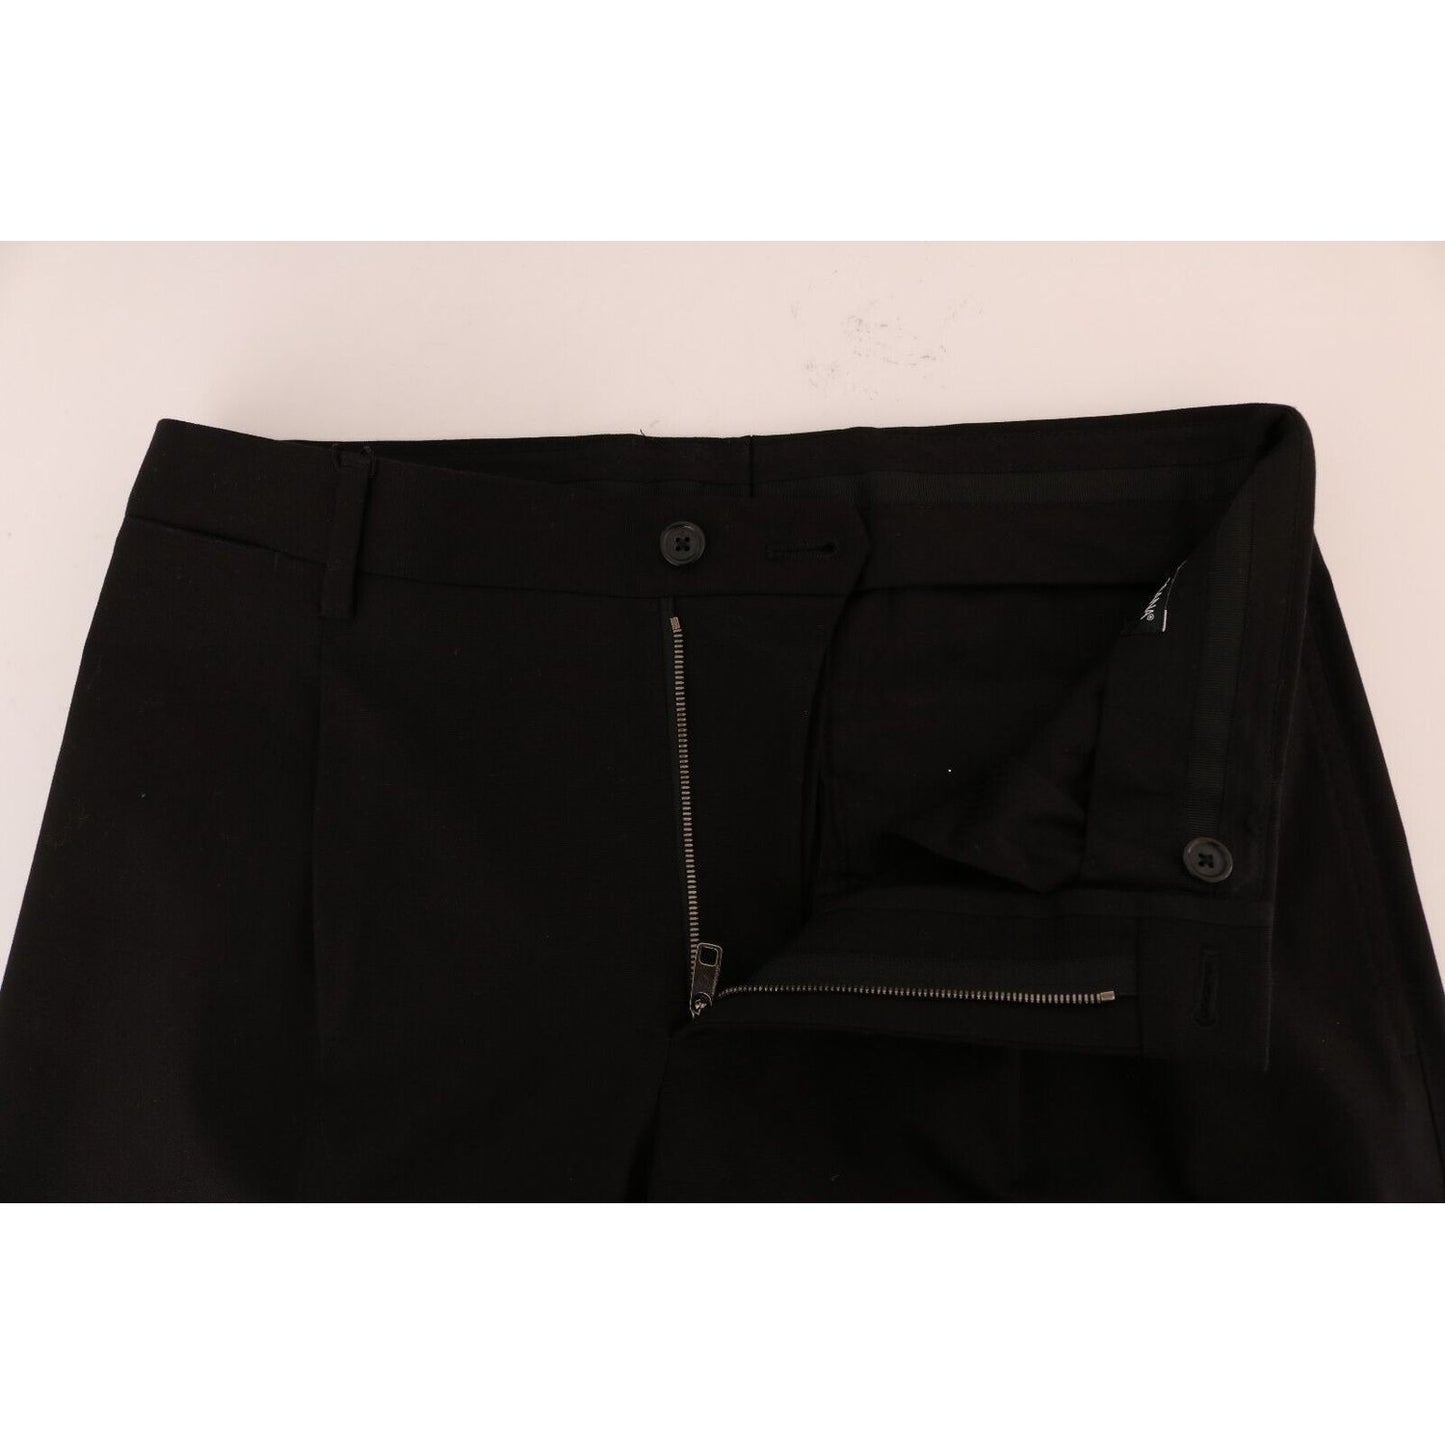 Dolce & Gabbana Elegant Black Cotton Stretch Pants black-men-straight-trouser-cotton-pants